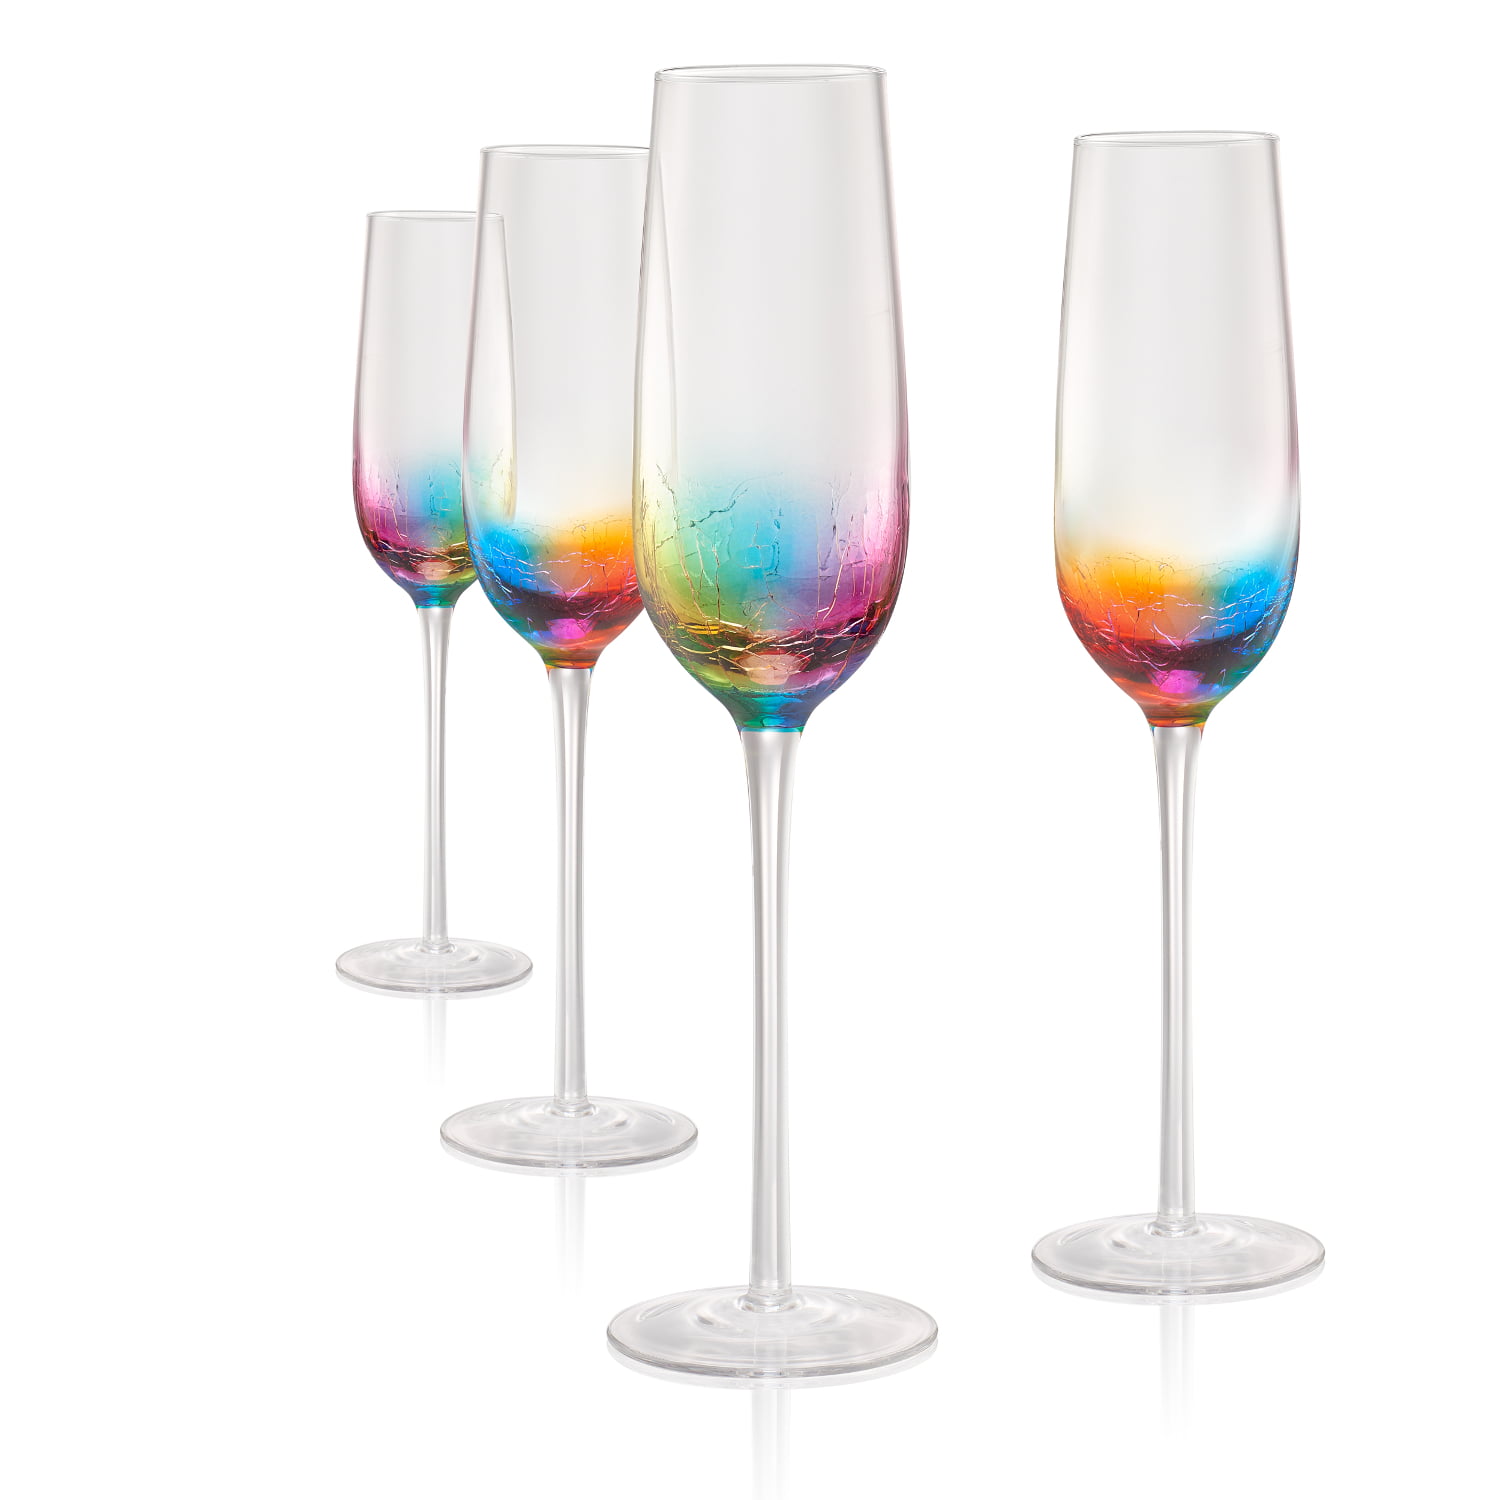 Artland Splash Flute Glasses Multicolor Set of 4 7 oz